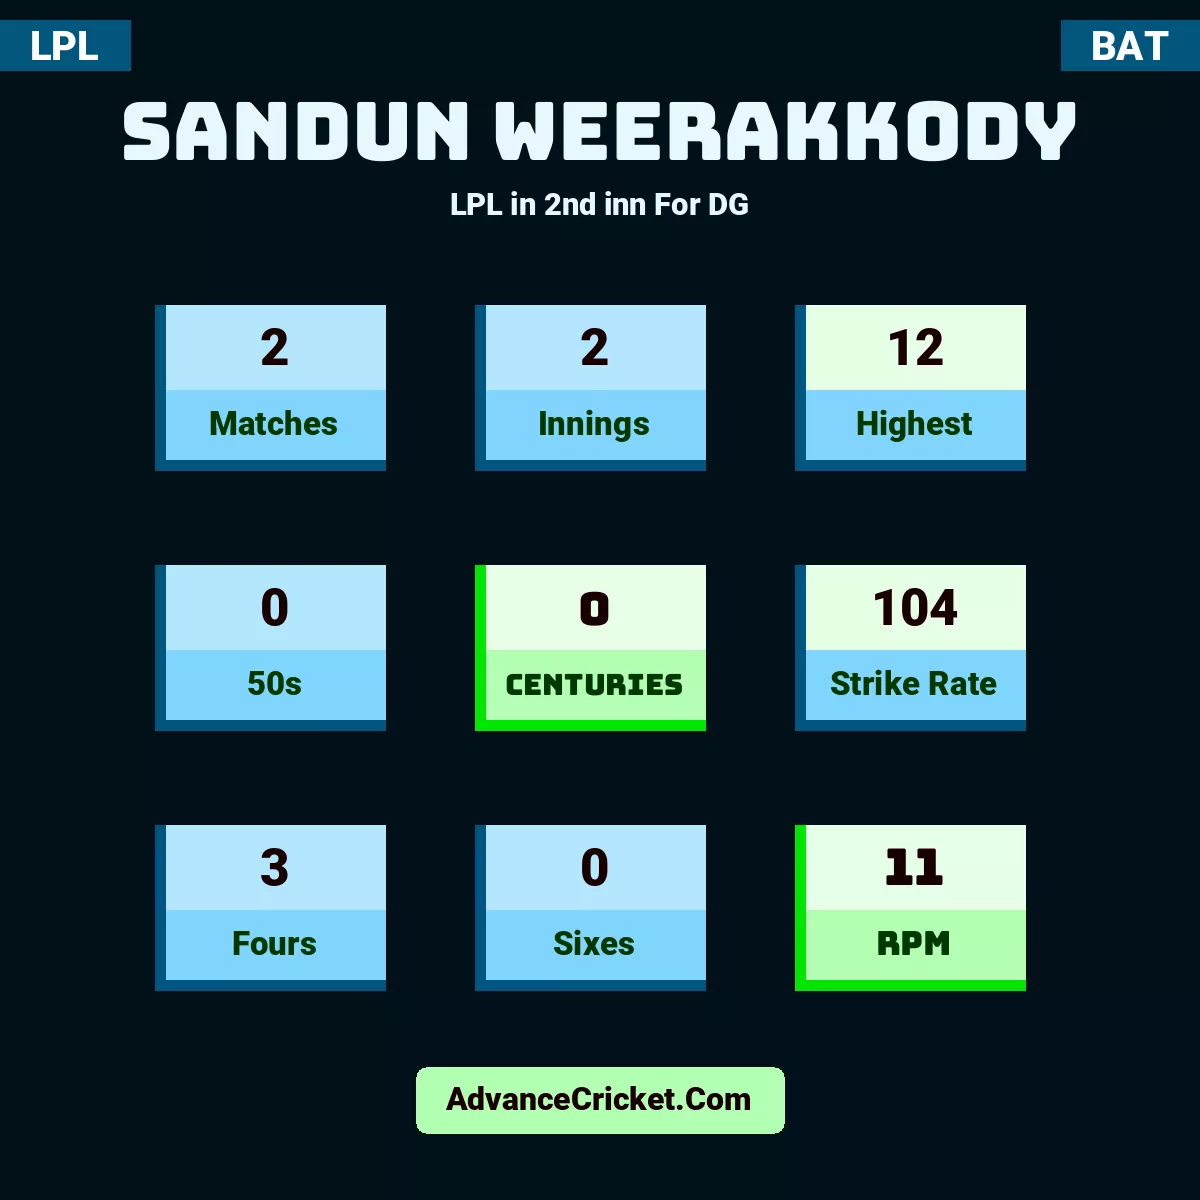 Sandun Weerakkody LPL  in 2nd inn For DG, Sandun Weerakkody played 2 matches, scored 12 runs as highest, 0 half-centuries, and 0 centuries, with a strike rate of 104. S.Weerakkody hit 3 fours and 0 sixes, with an RPM of 11.